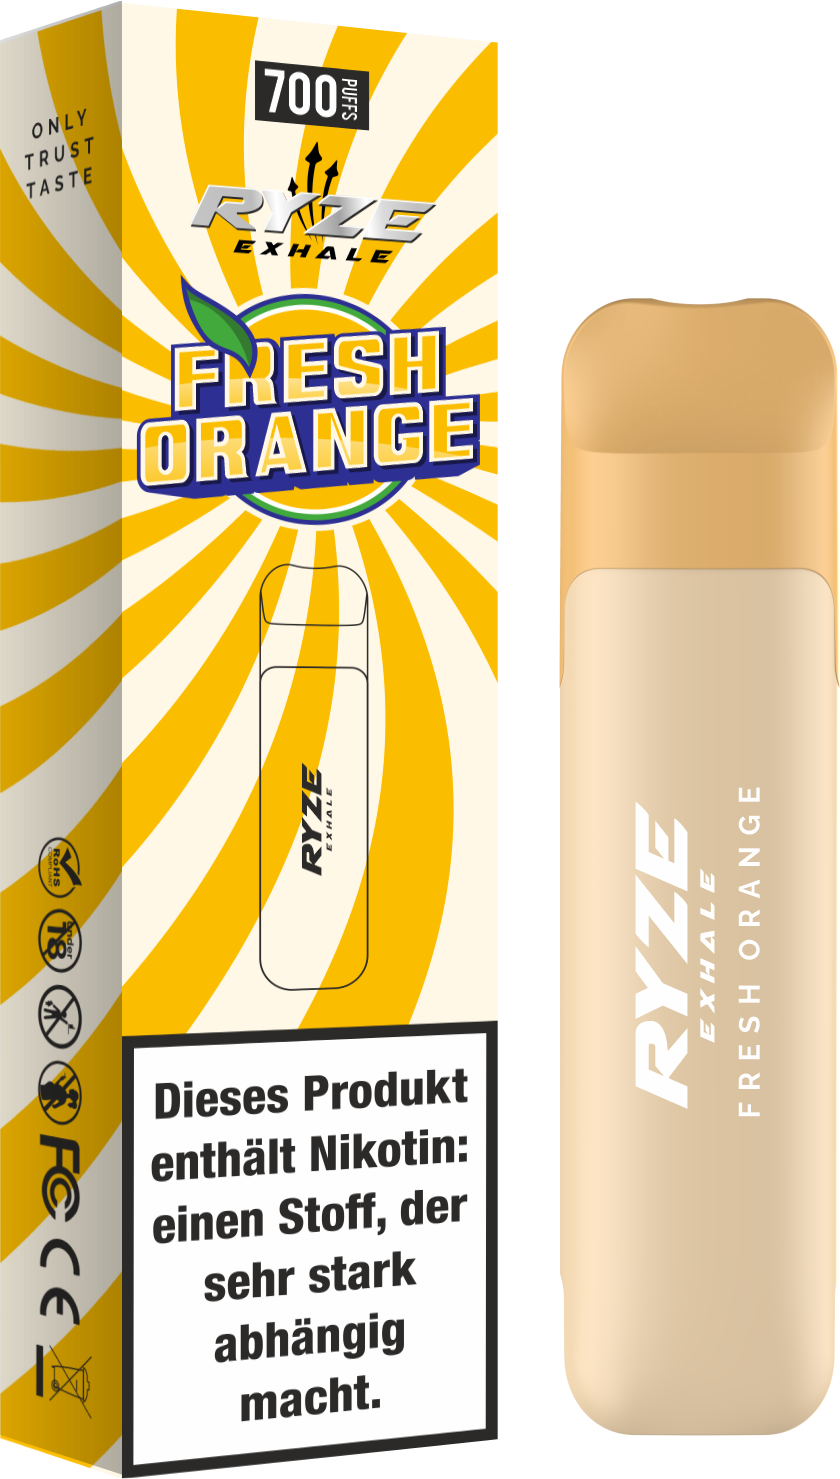 Ryze Exhale - Fresh Orange 20mg